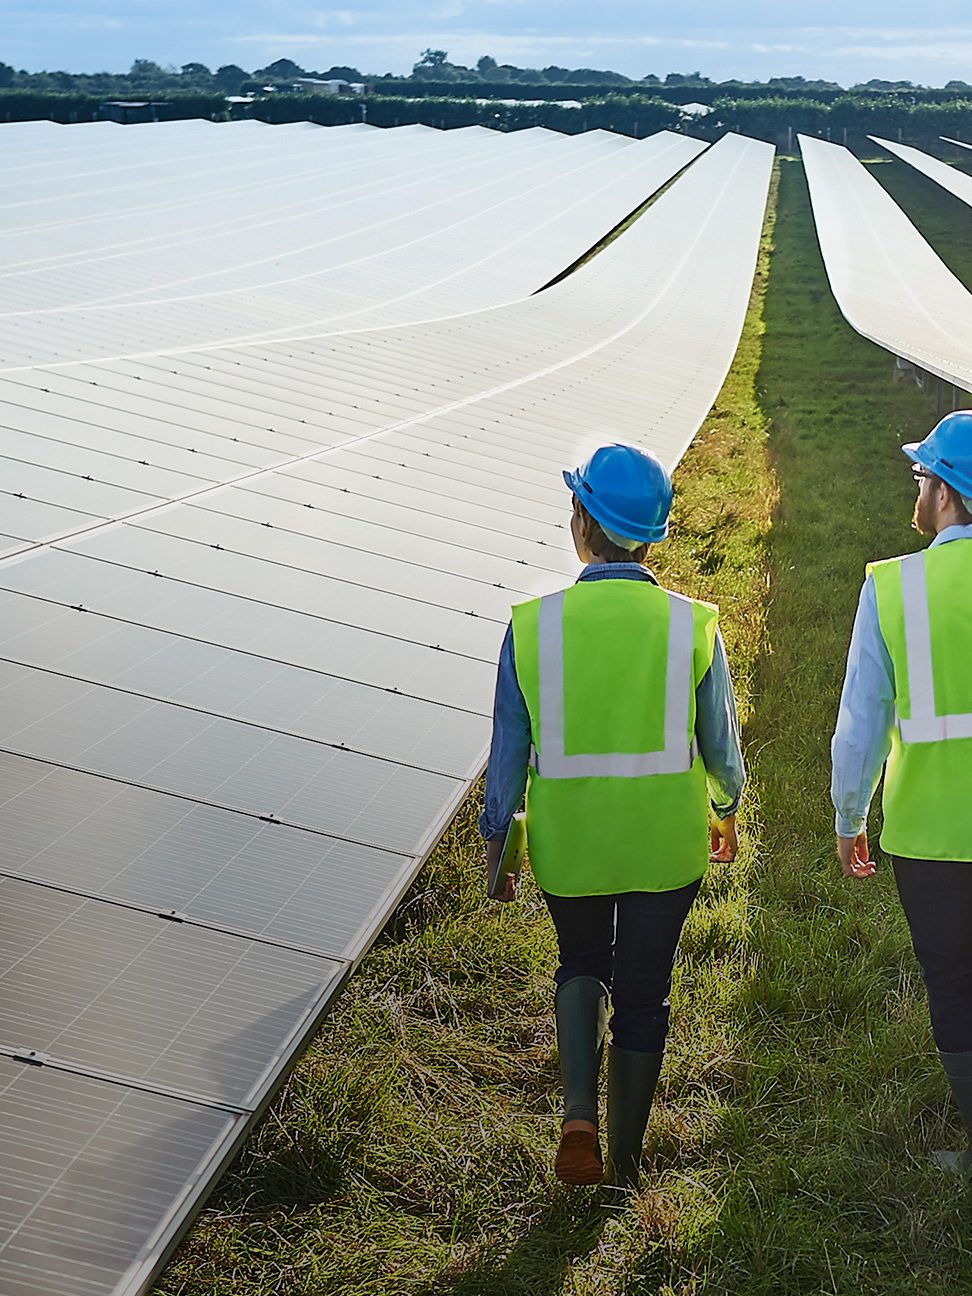 Surveying Engineers in safety wear in solar farm